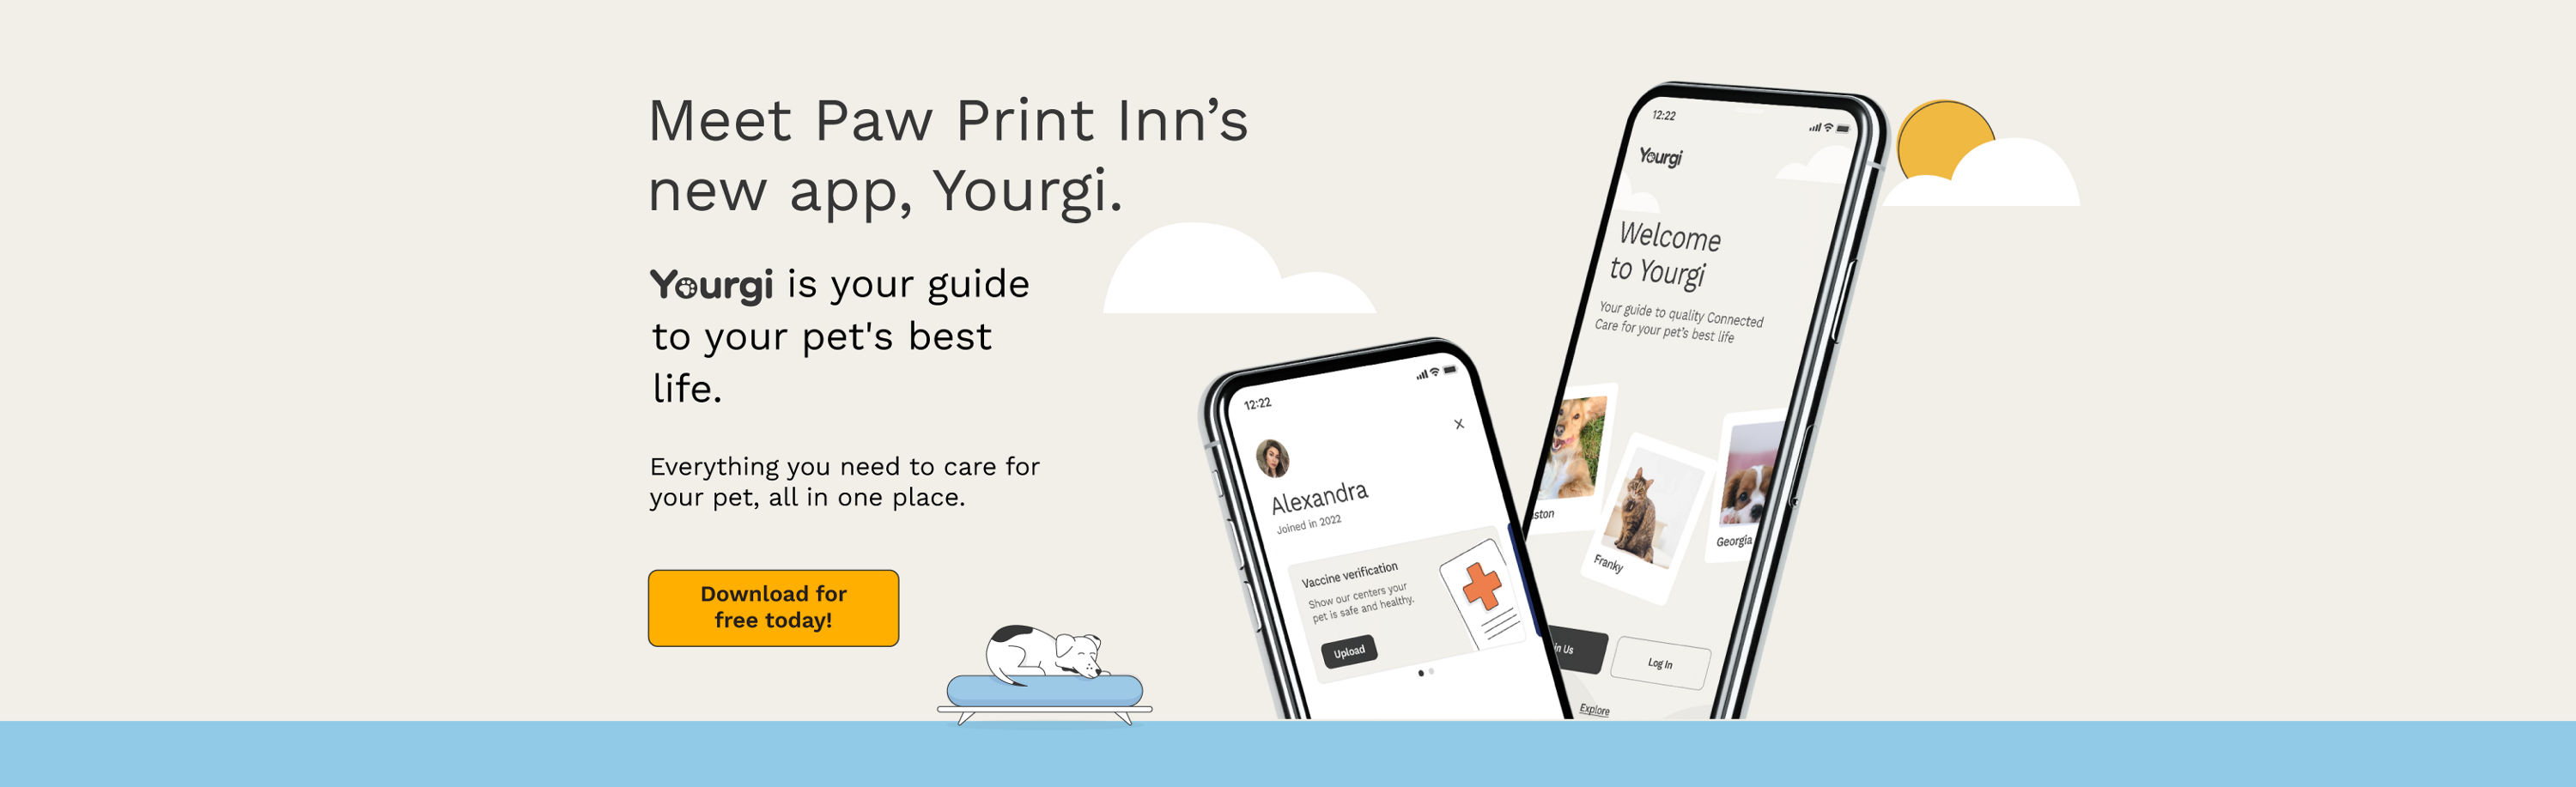 Meet Paw Print Inn's new app, Yourgi.